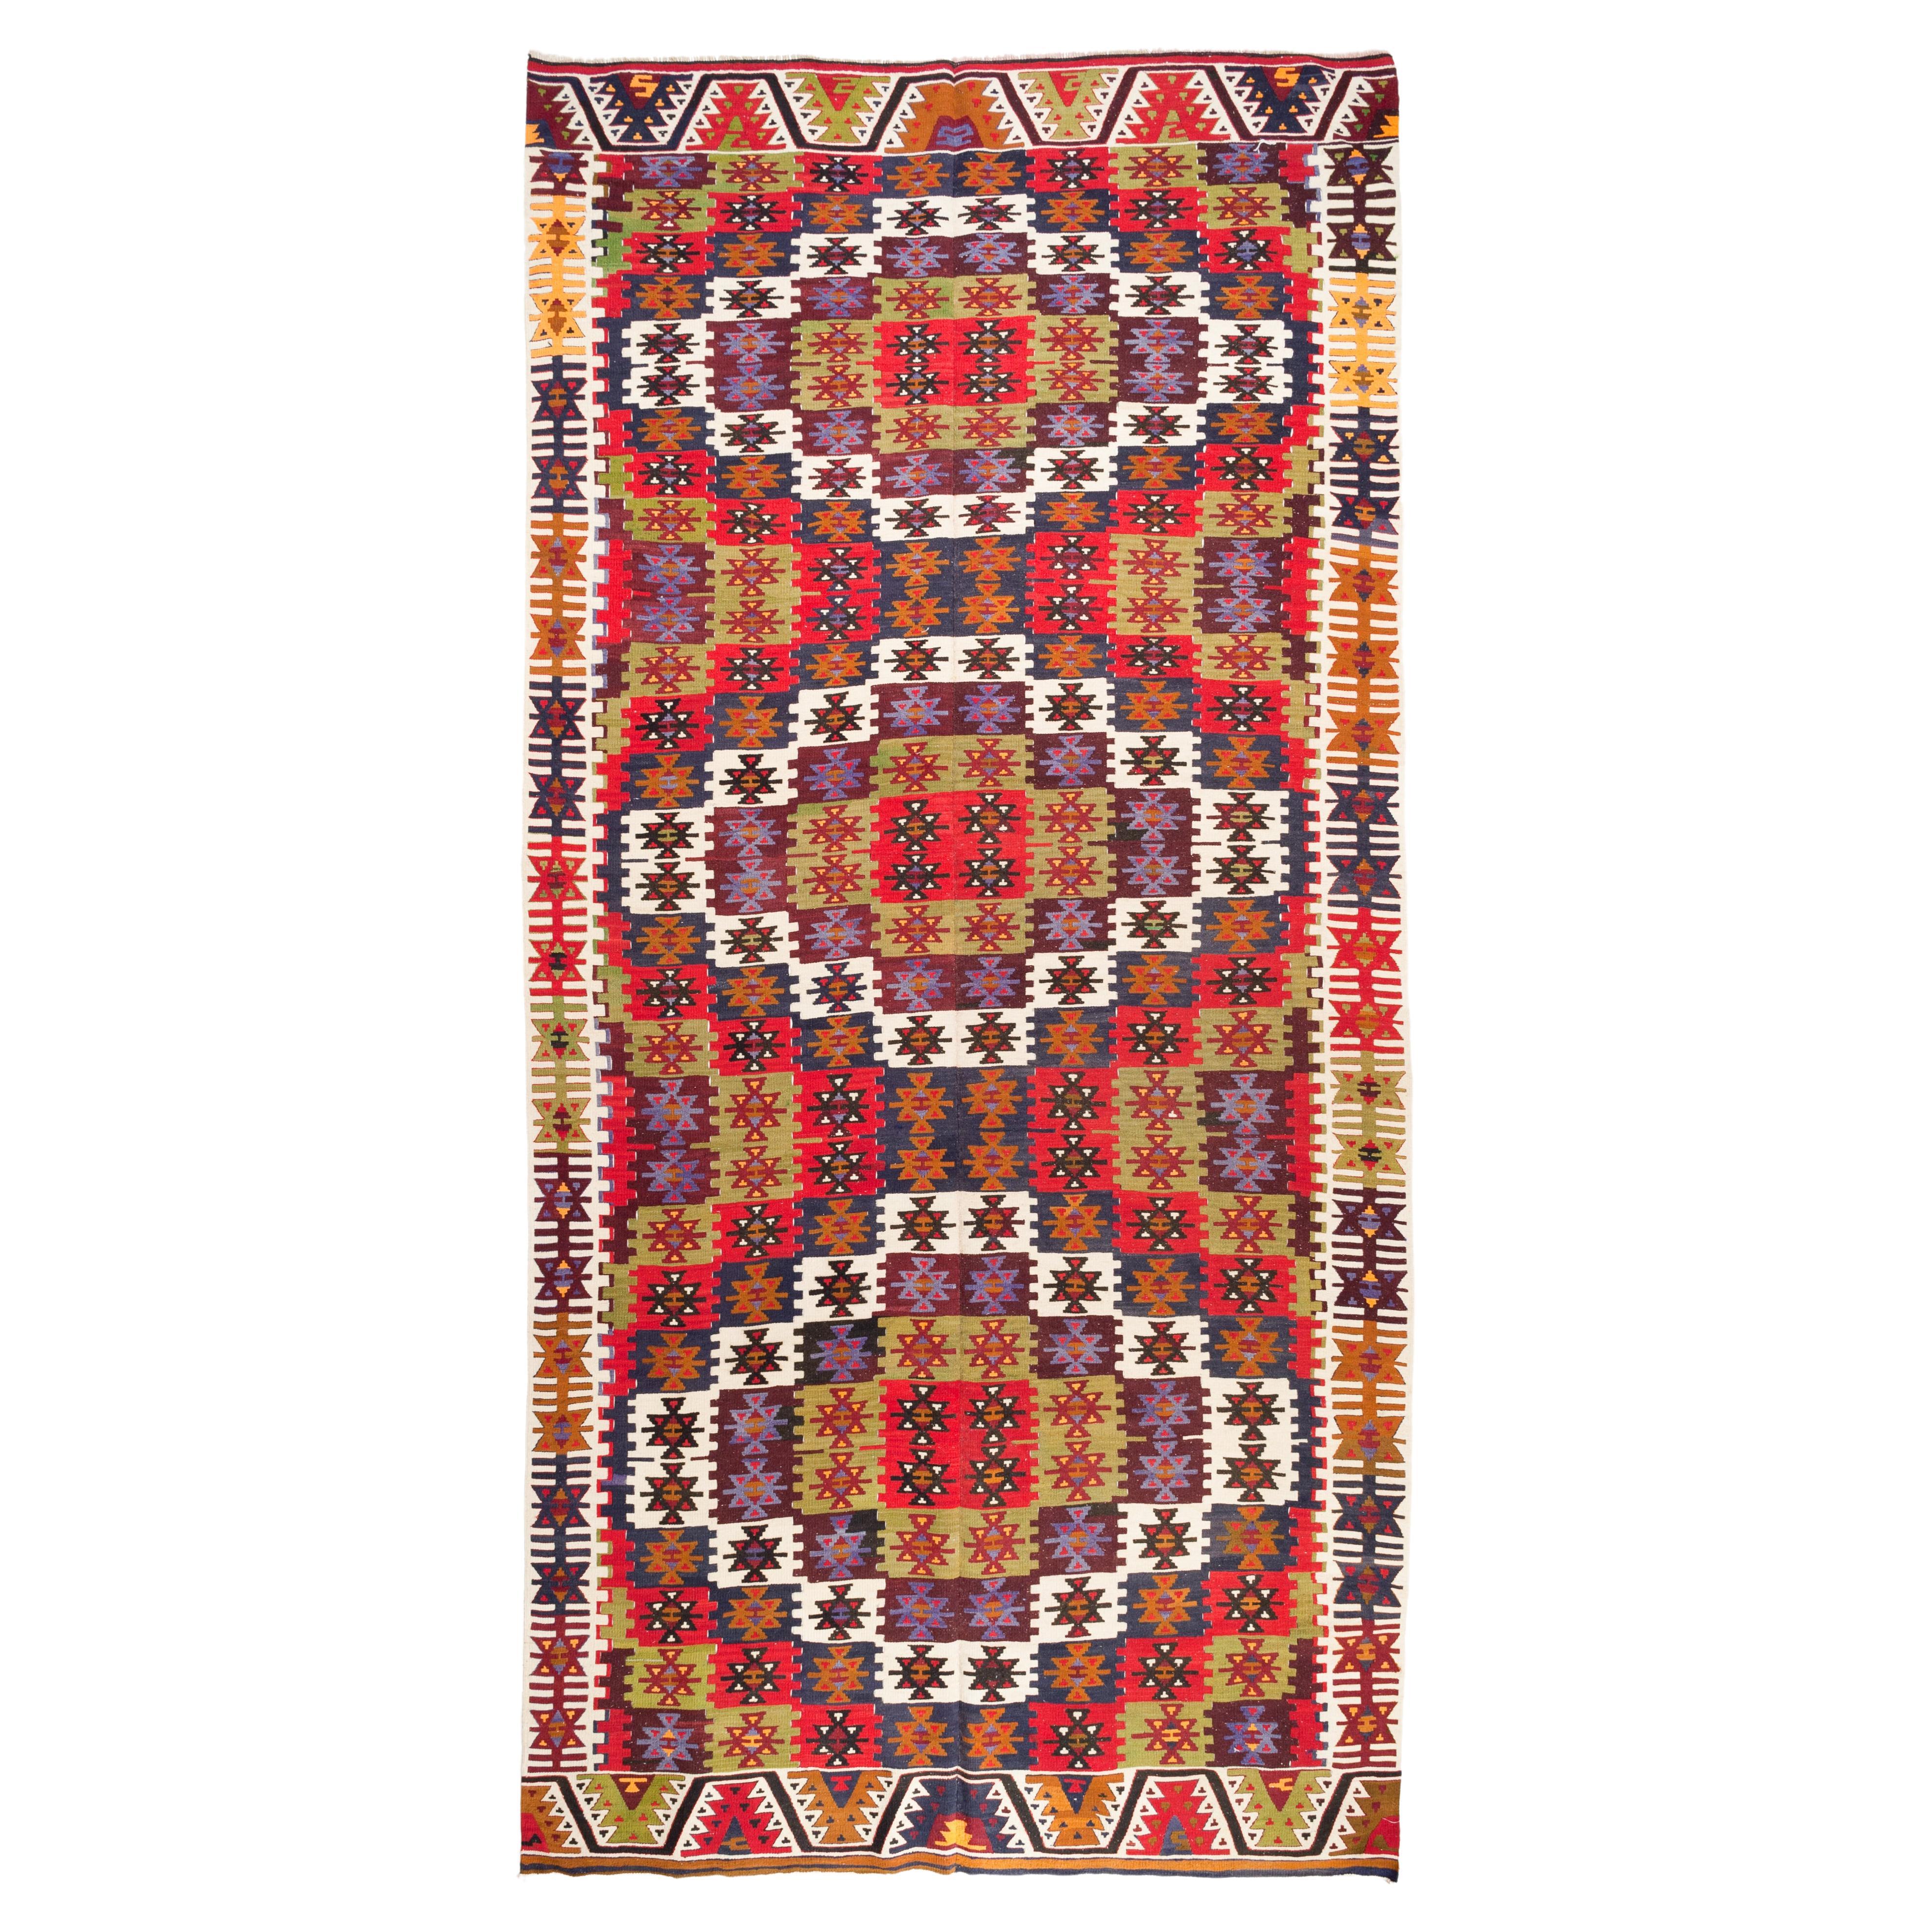 Old Adana Kilim Southern Anatolian Carpet Turkish Rug